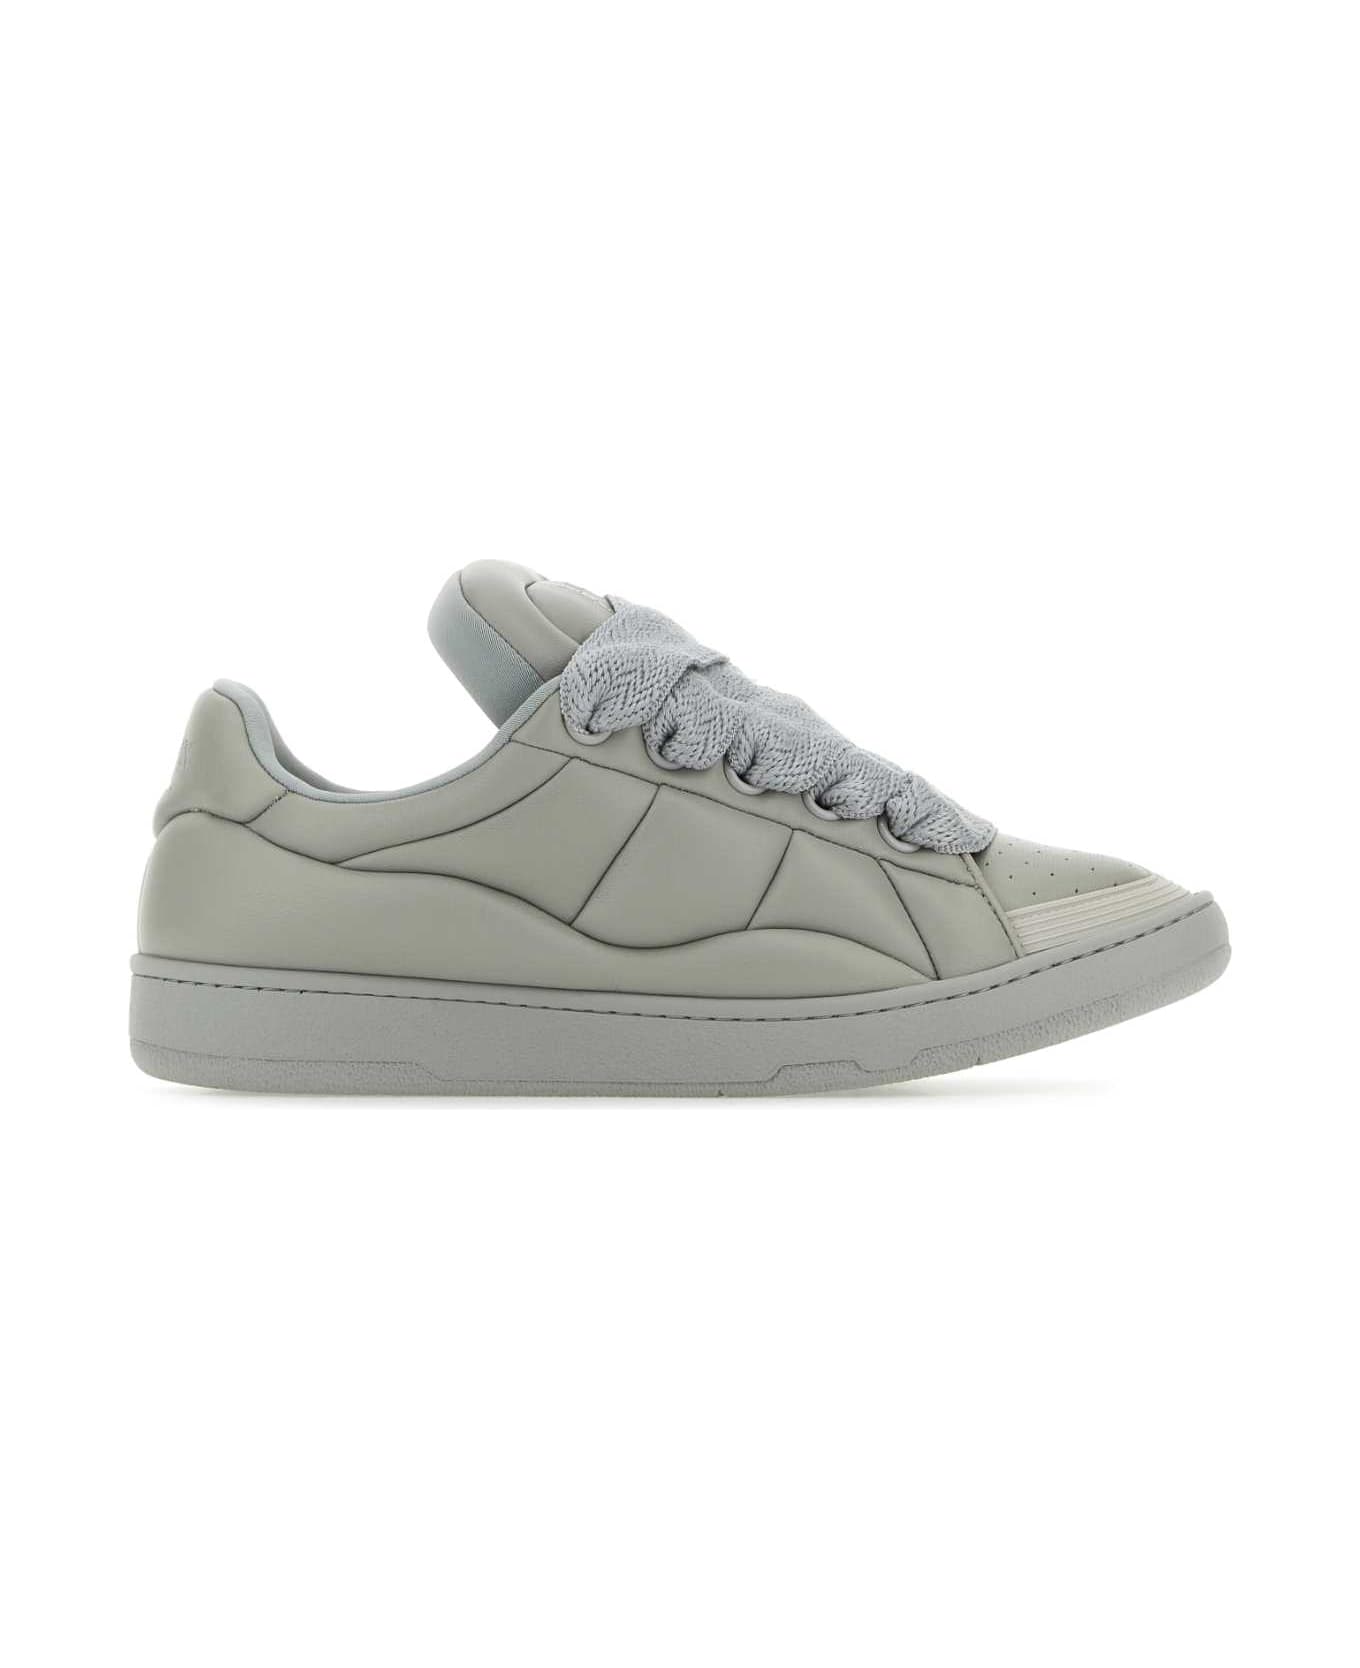 Lanvin Grey Leather Curb Xl Sneakers - PLATREPLATRE スニーカー